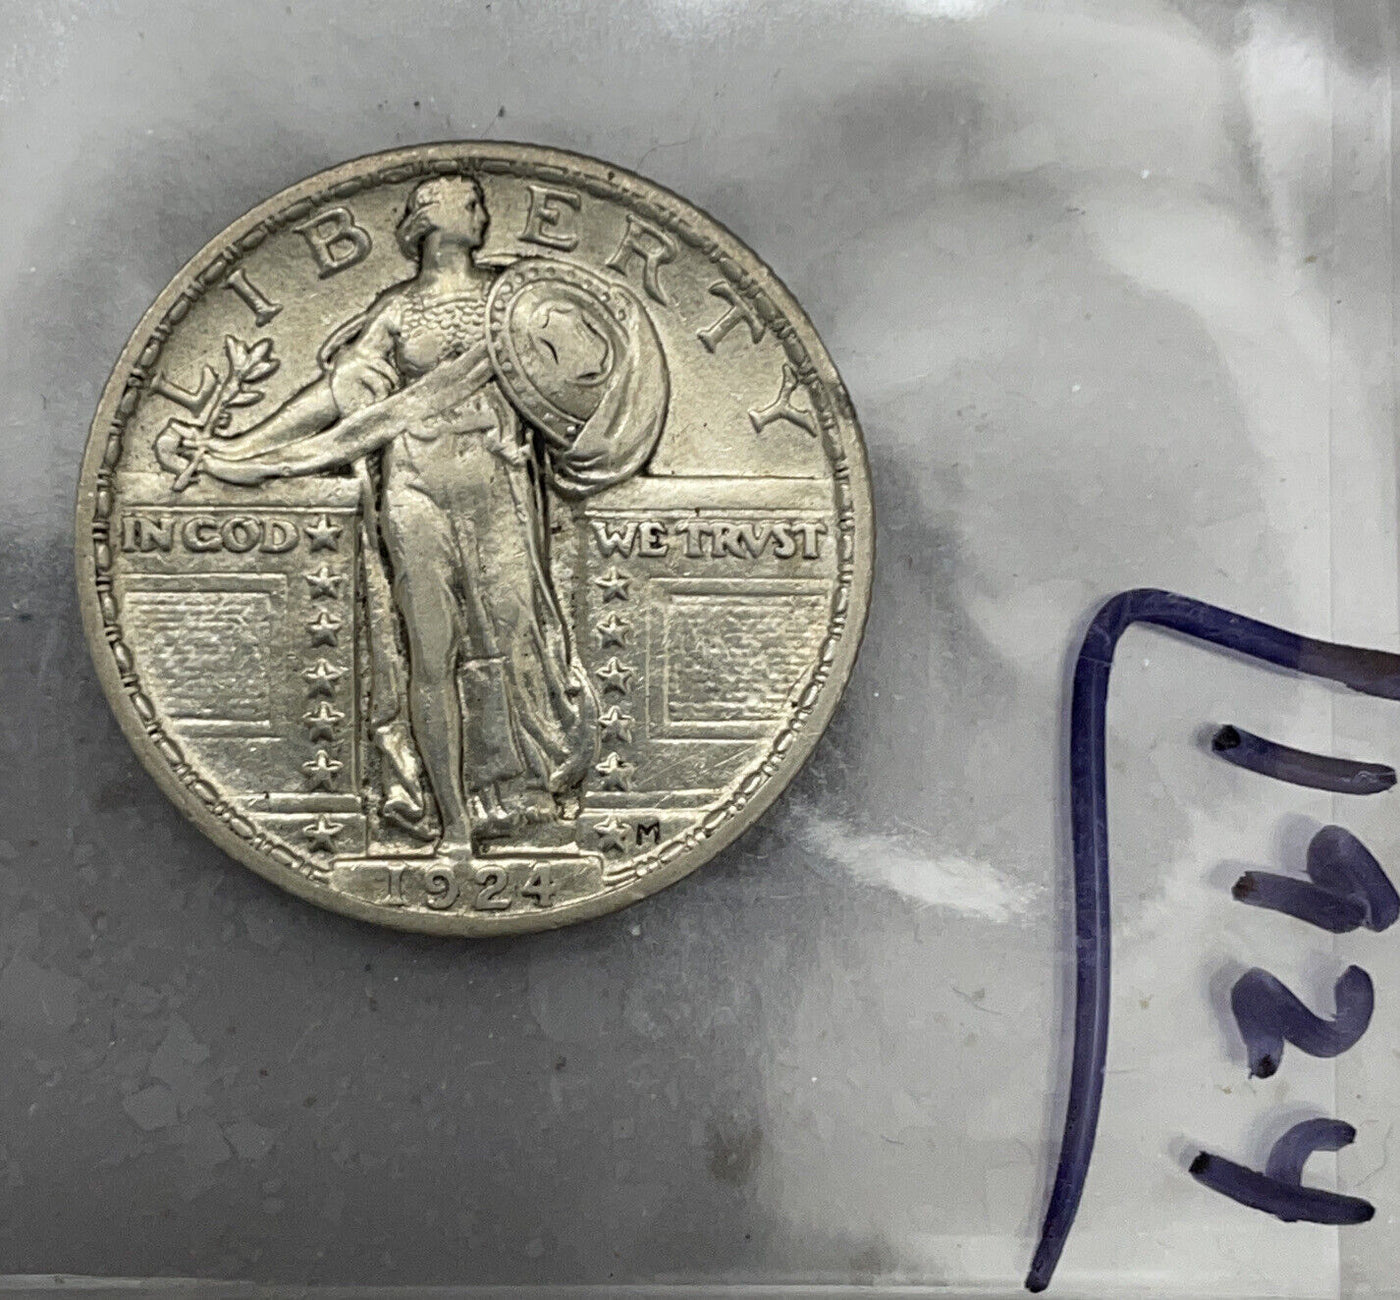 OldMan Duffy’s Ch AU 1924 StandingLiberty Silver Quarter Gr8 EyeAppeal Price Cut